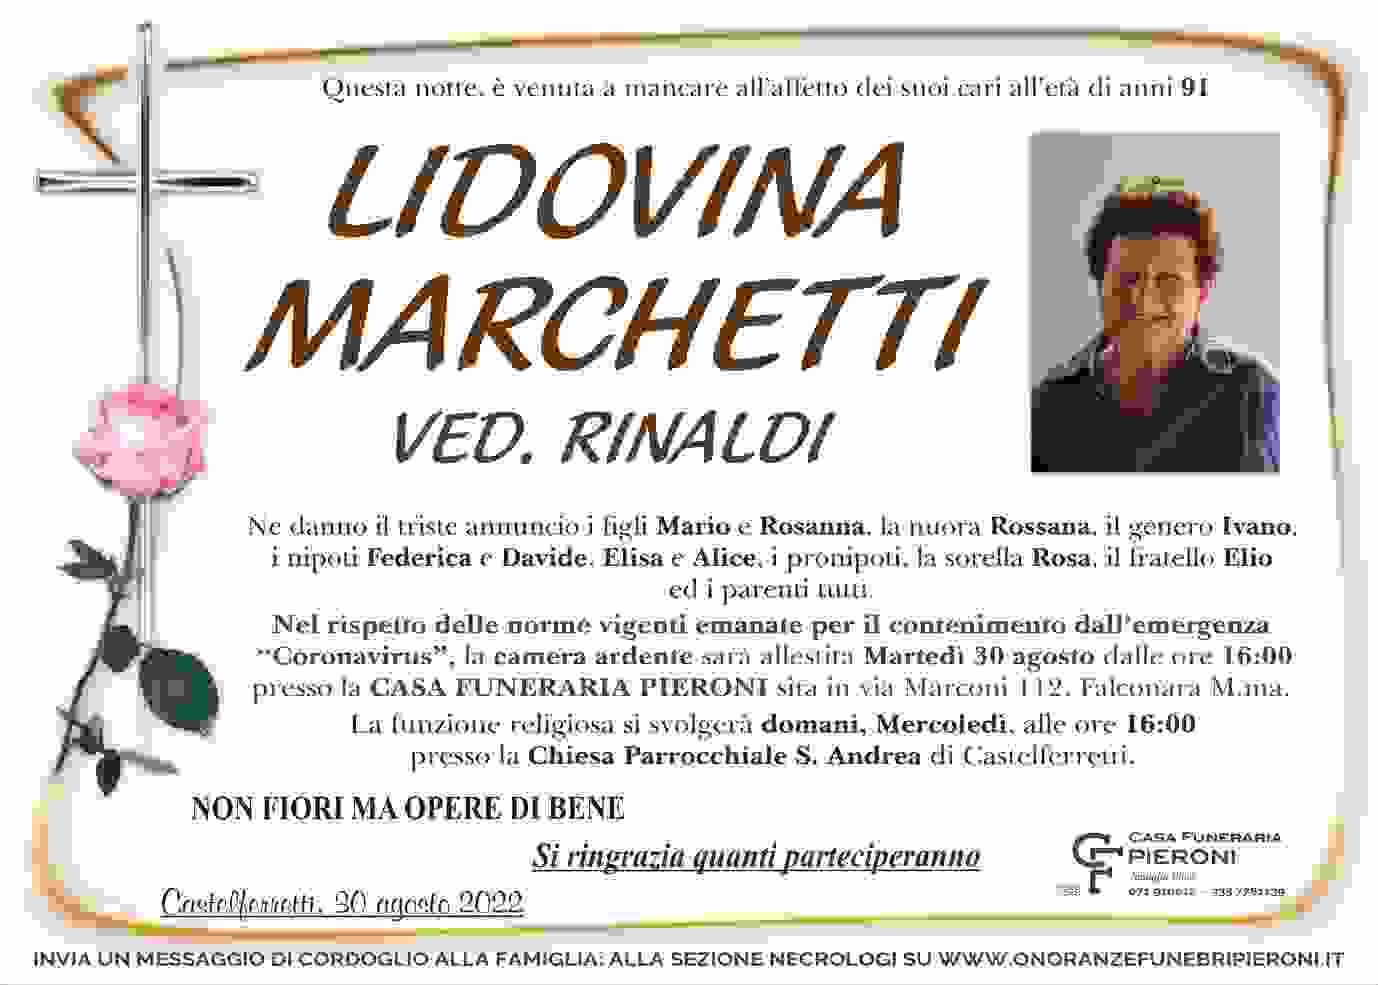 Lidovina Marchetti